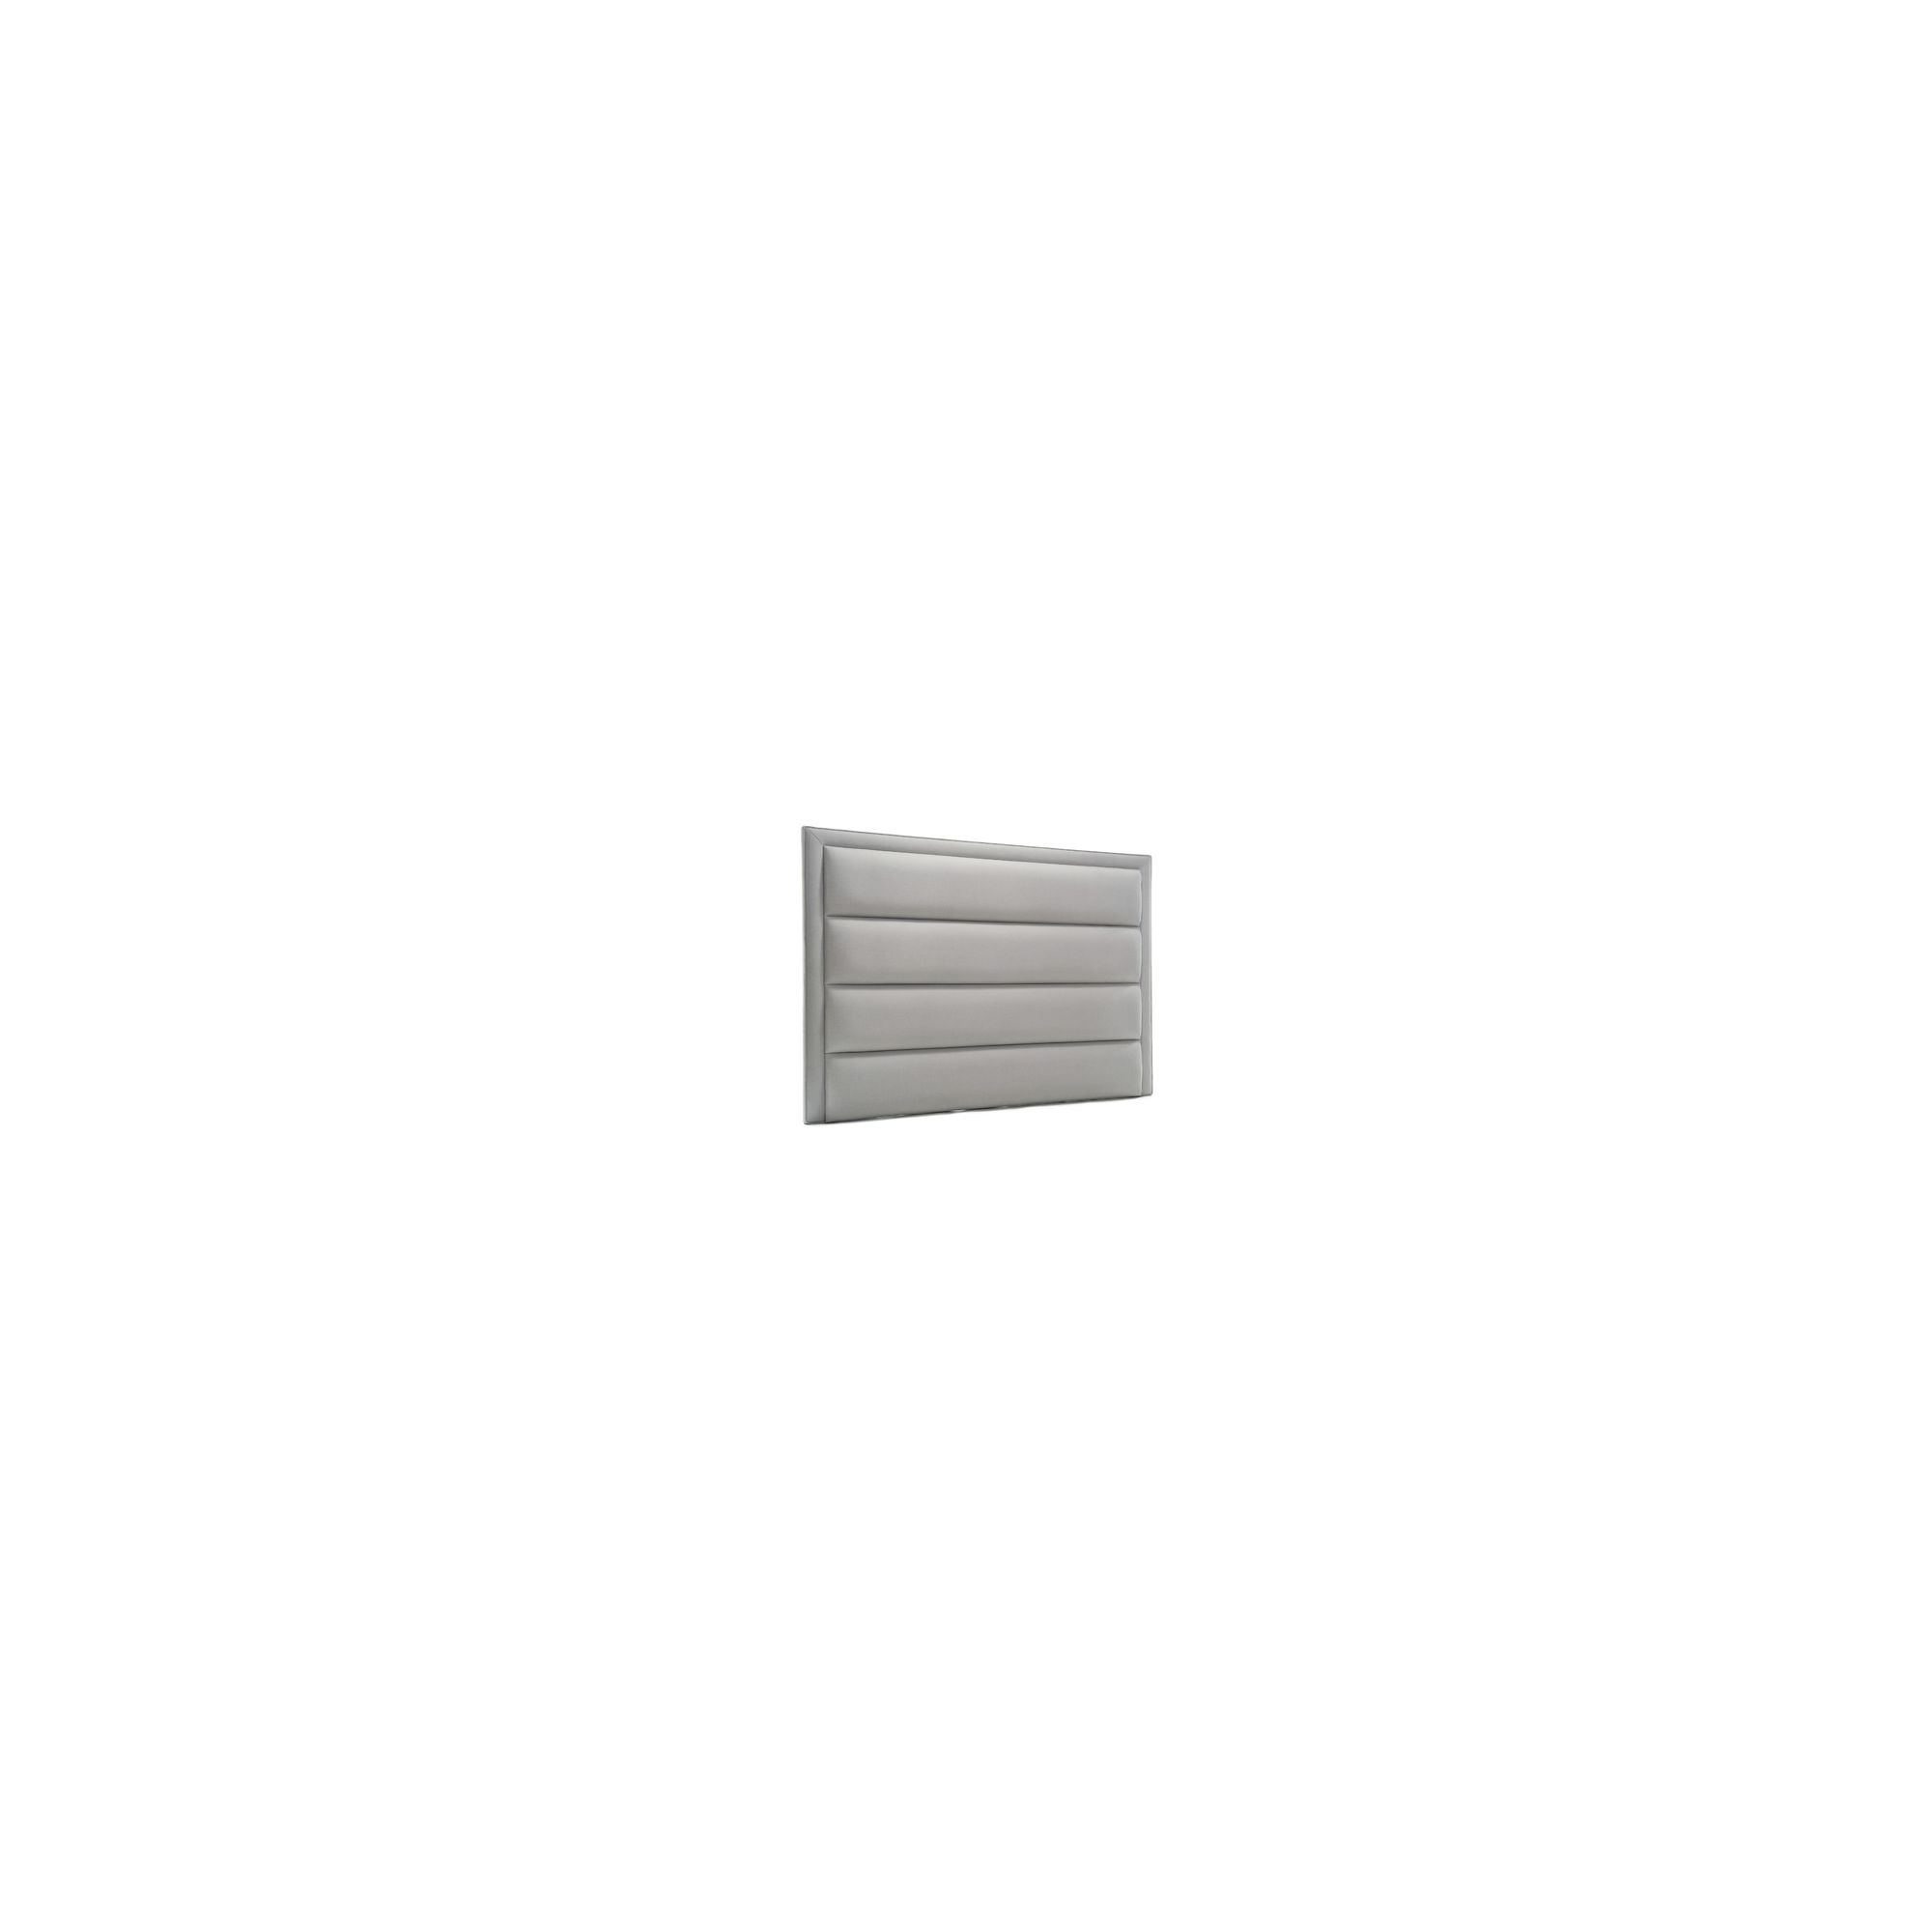 PC Upholstery Oslo Headboard - Cream - 3' Single at Tesco Direct